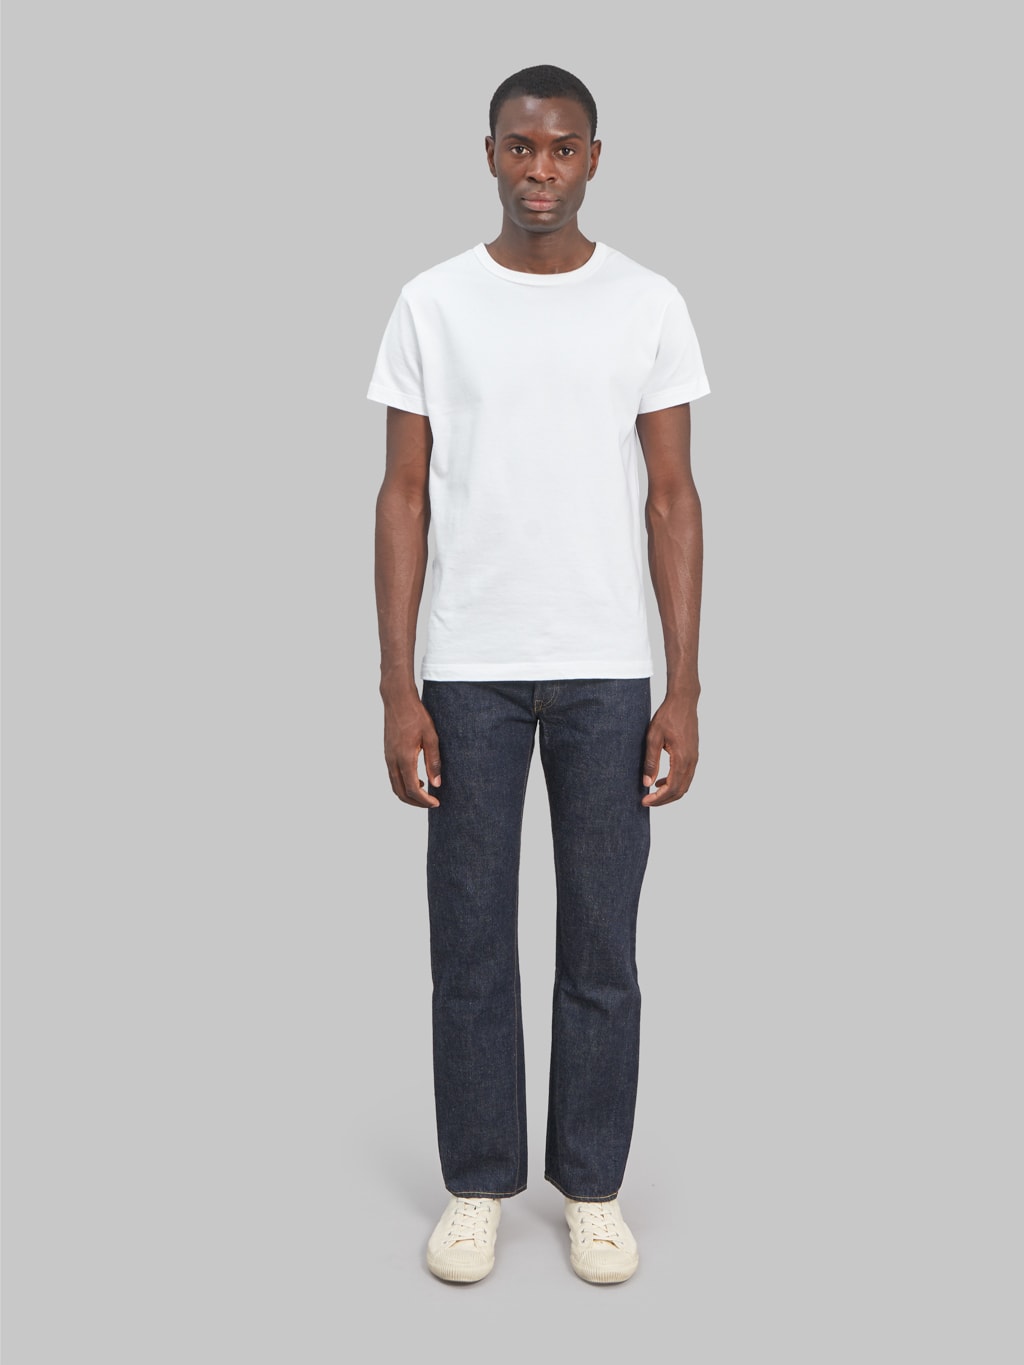 Fullcount 1108W 13.7oz Slim Straight Jeans